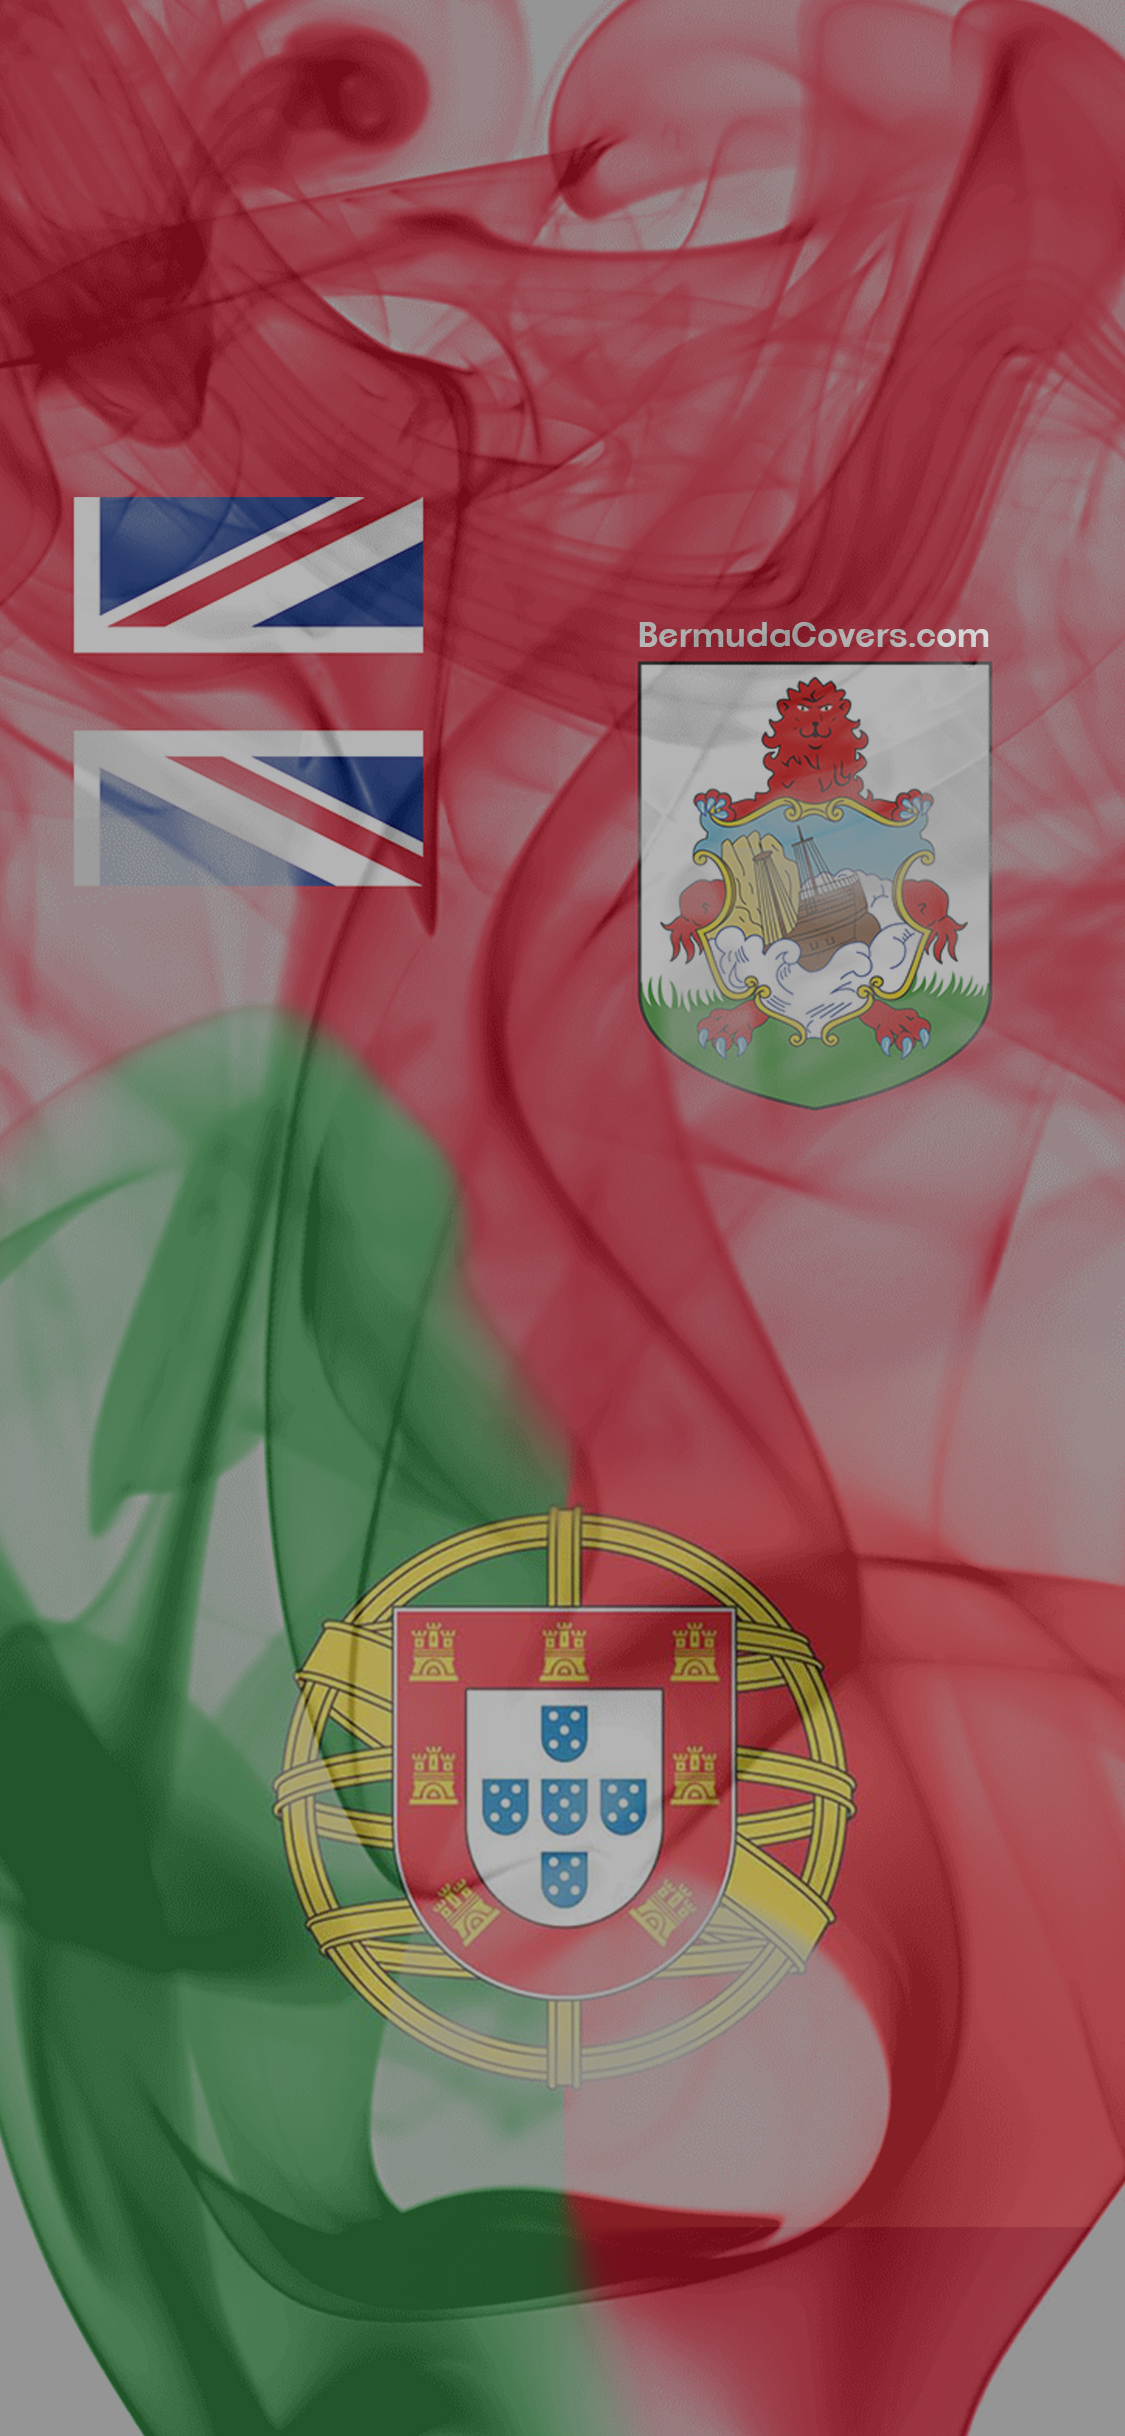 Wallpaper Wednesday: Bermuda & Portugal Flags